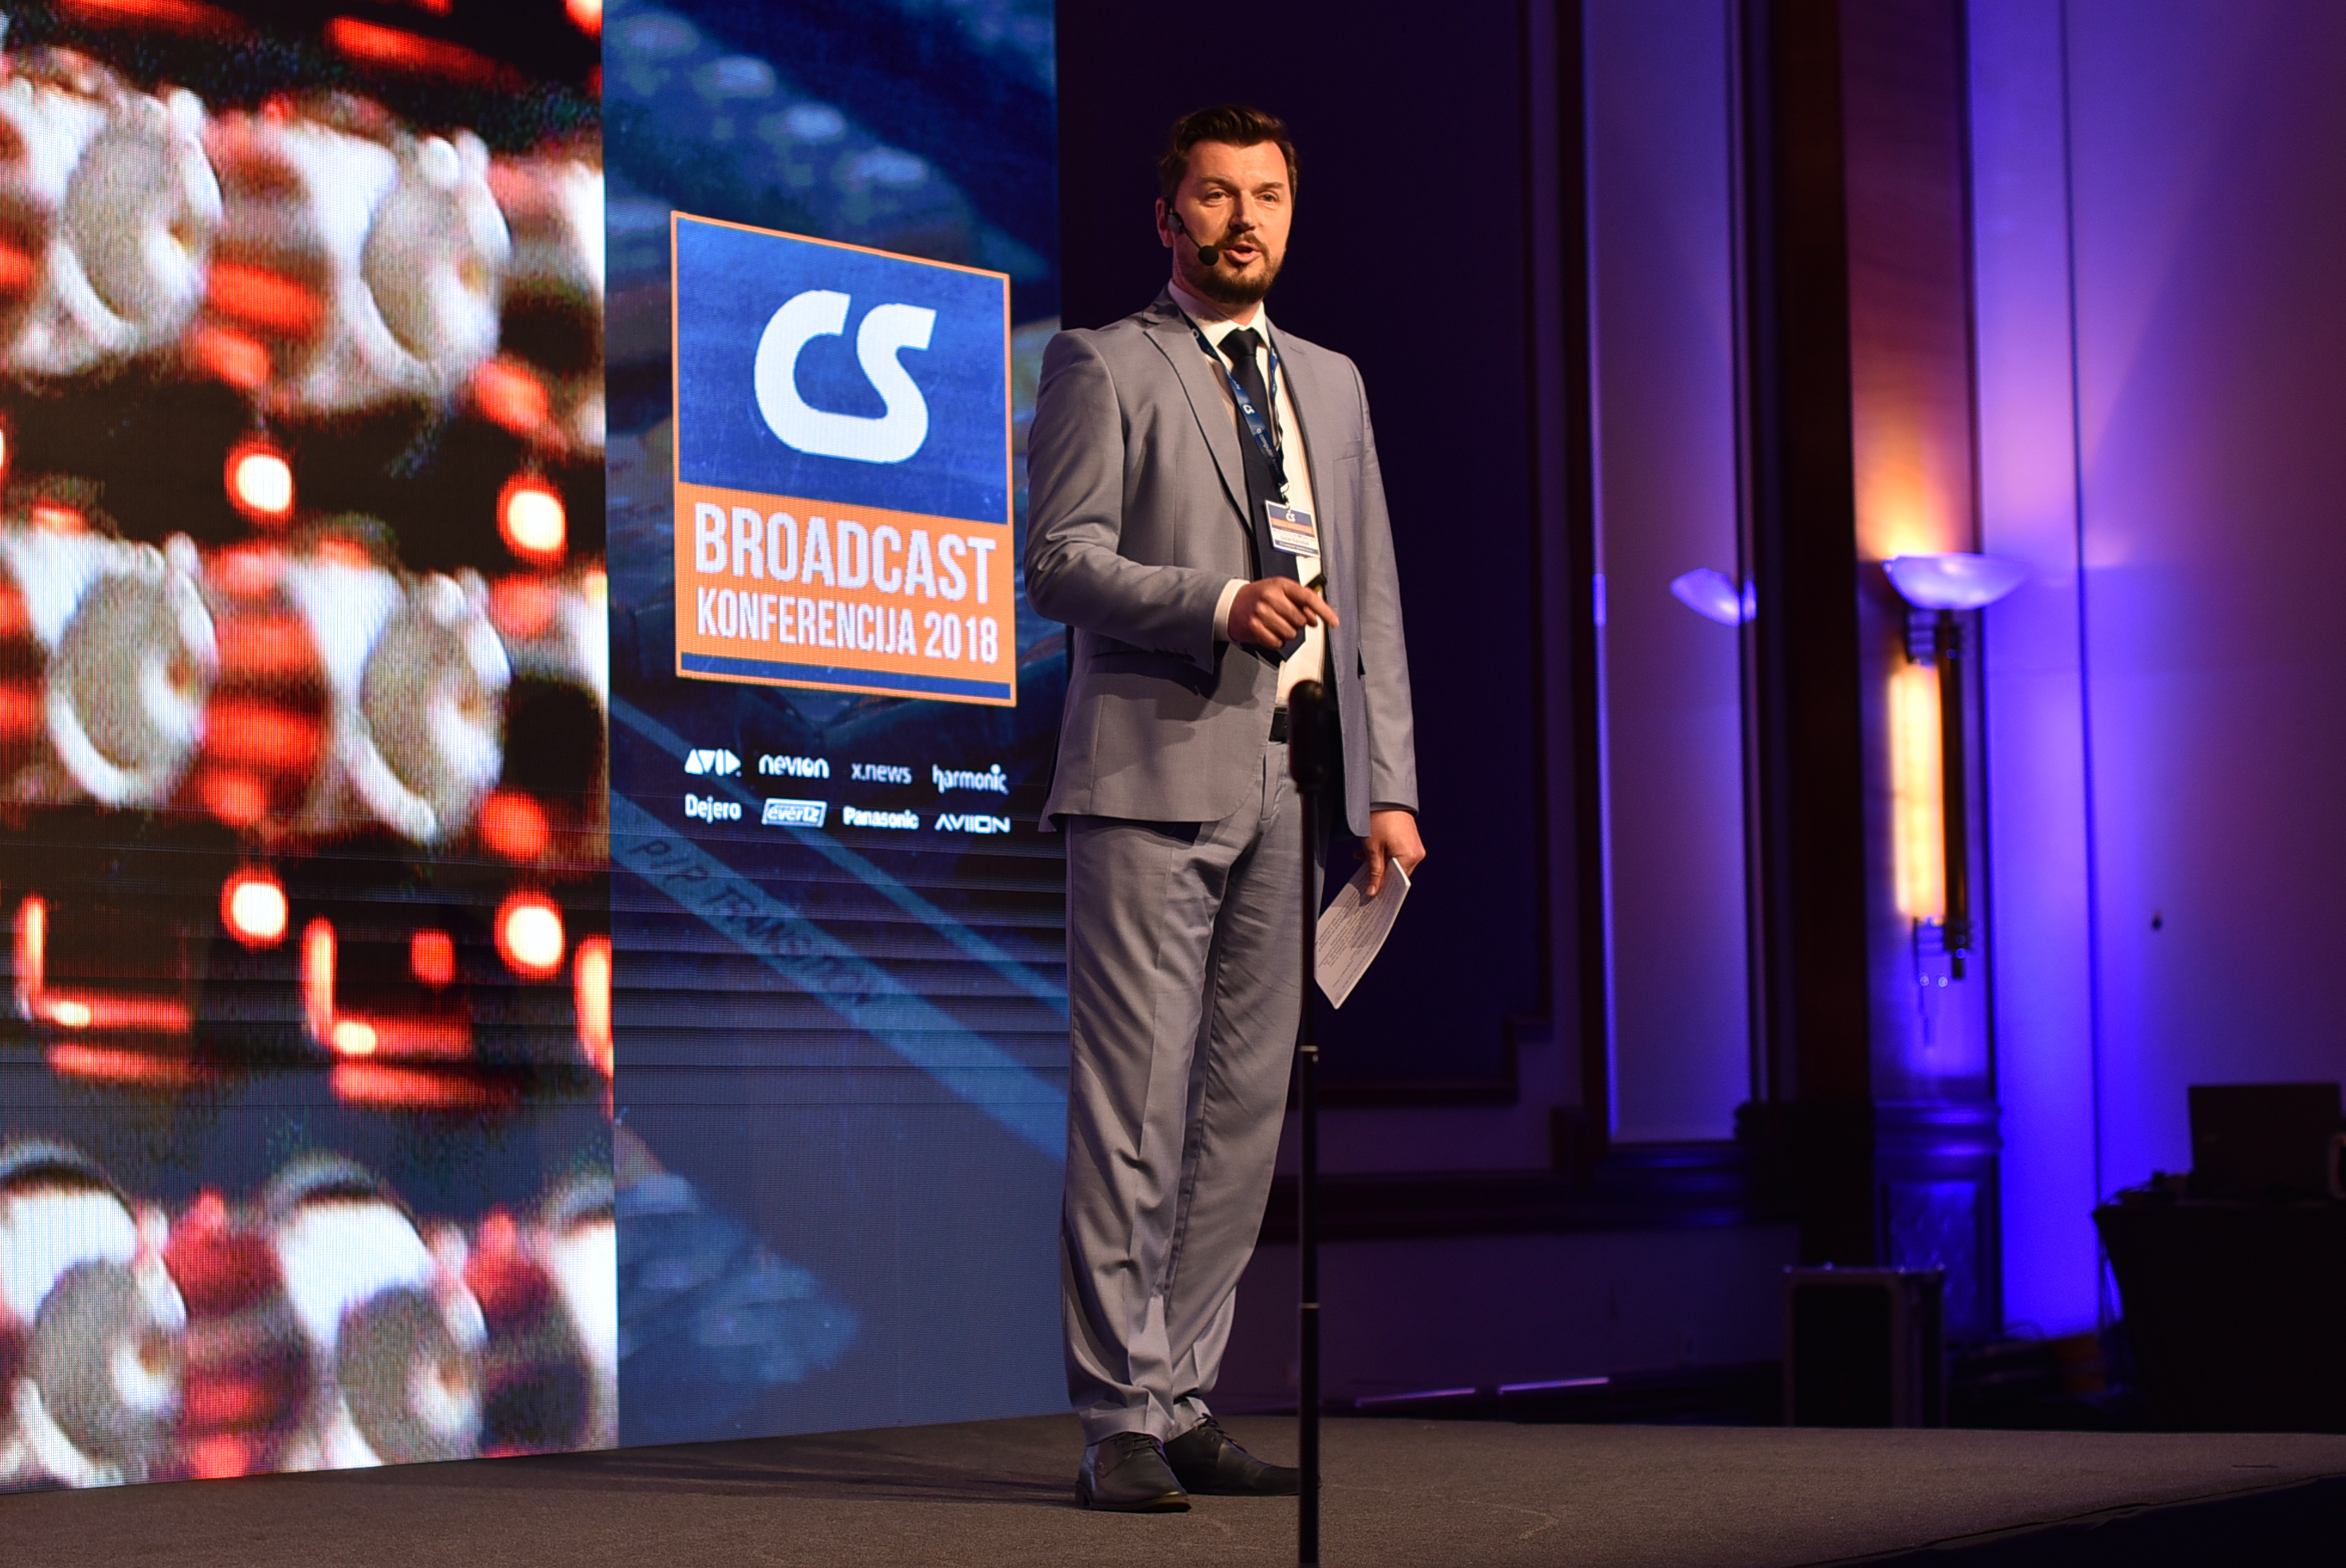 CS Broadcast konferencija 2018